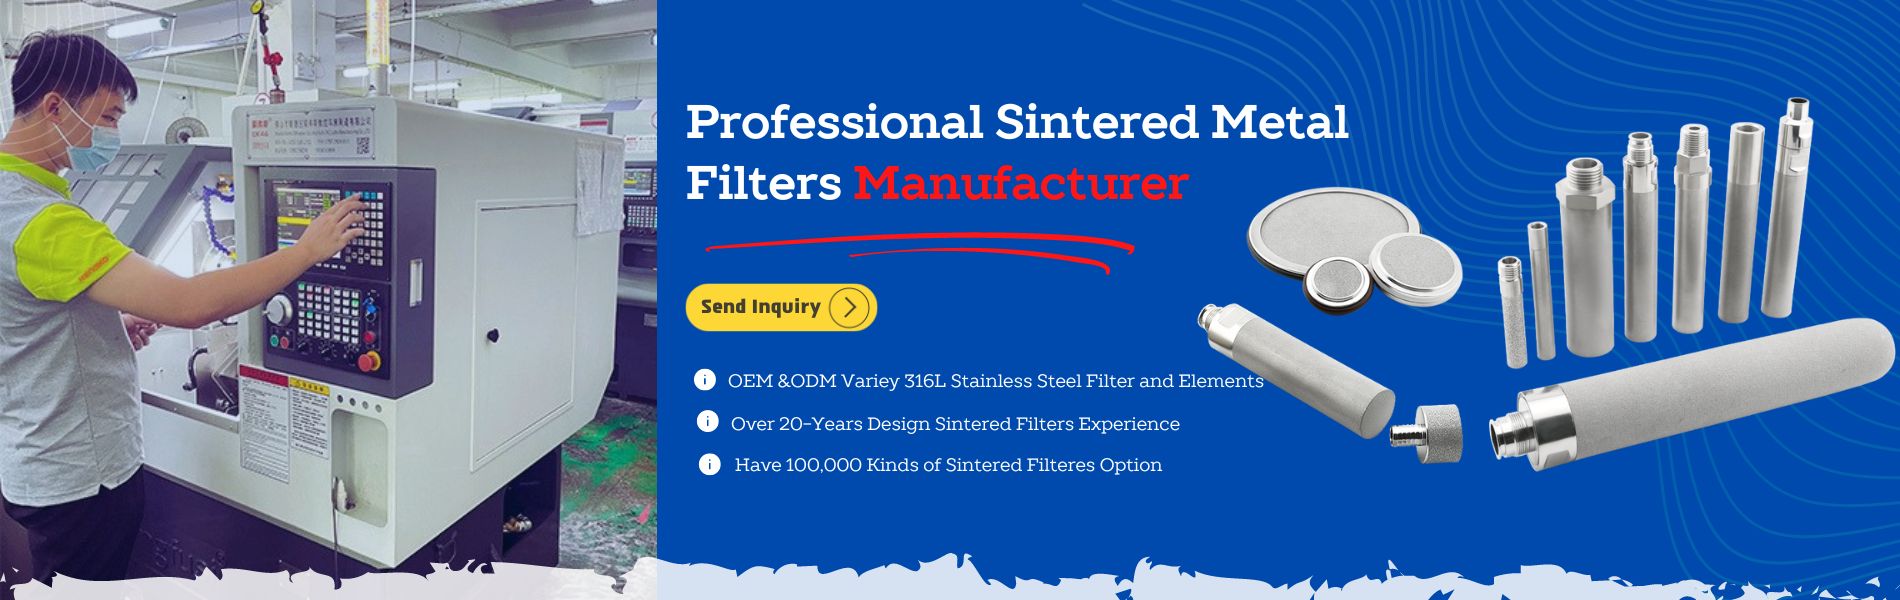 Propesyonal nga Sintered Metal Filter Manufacturer